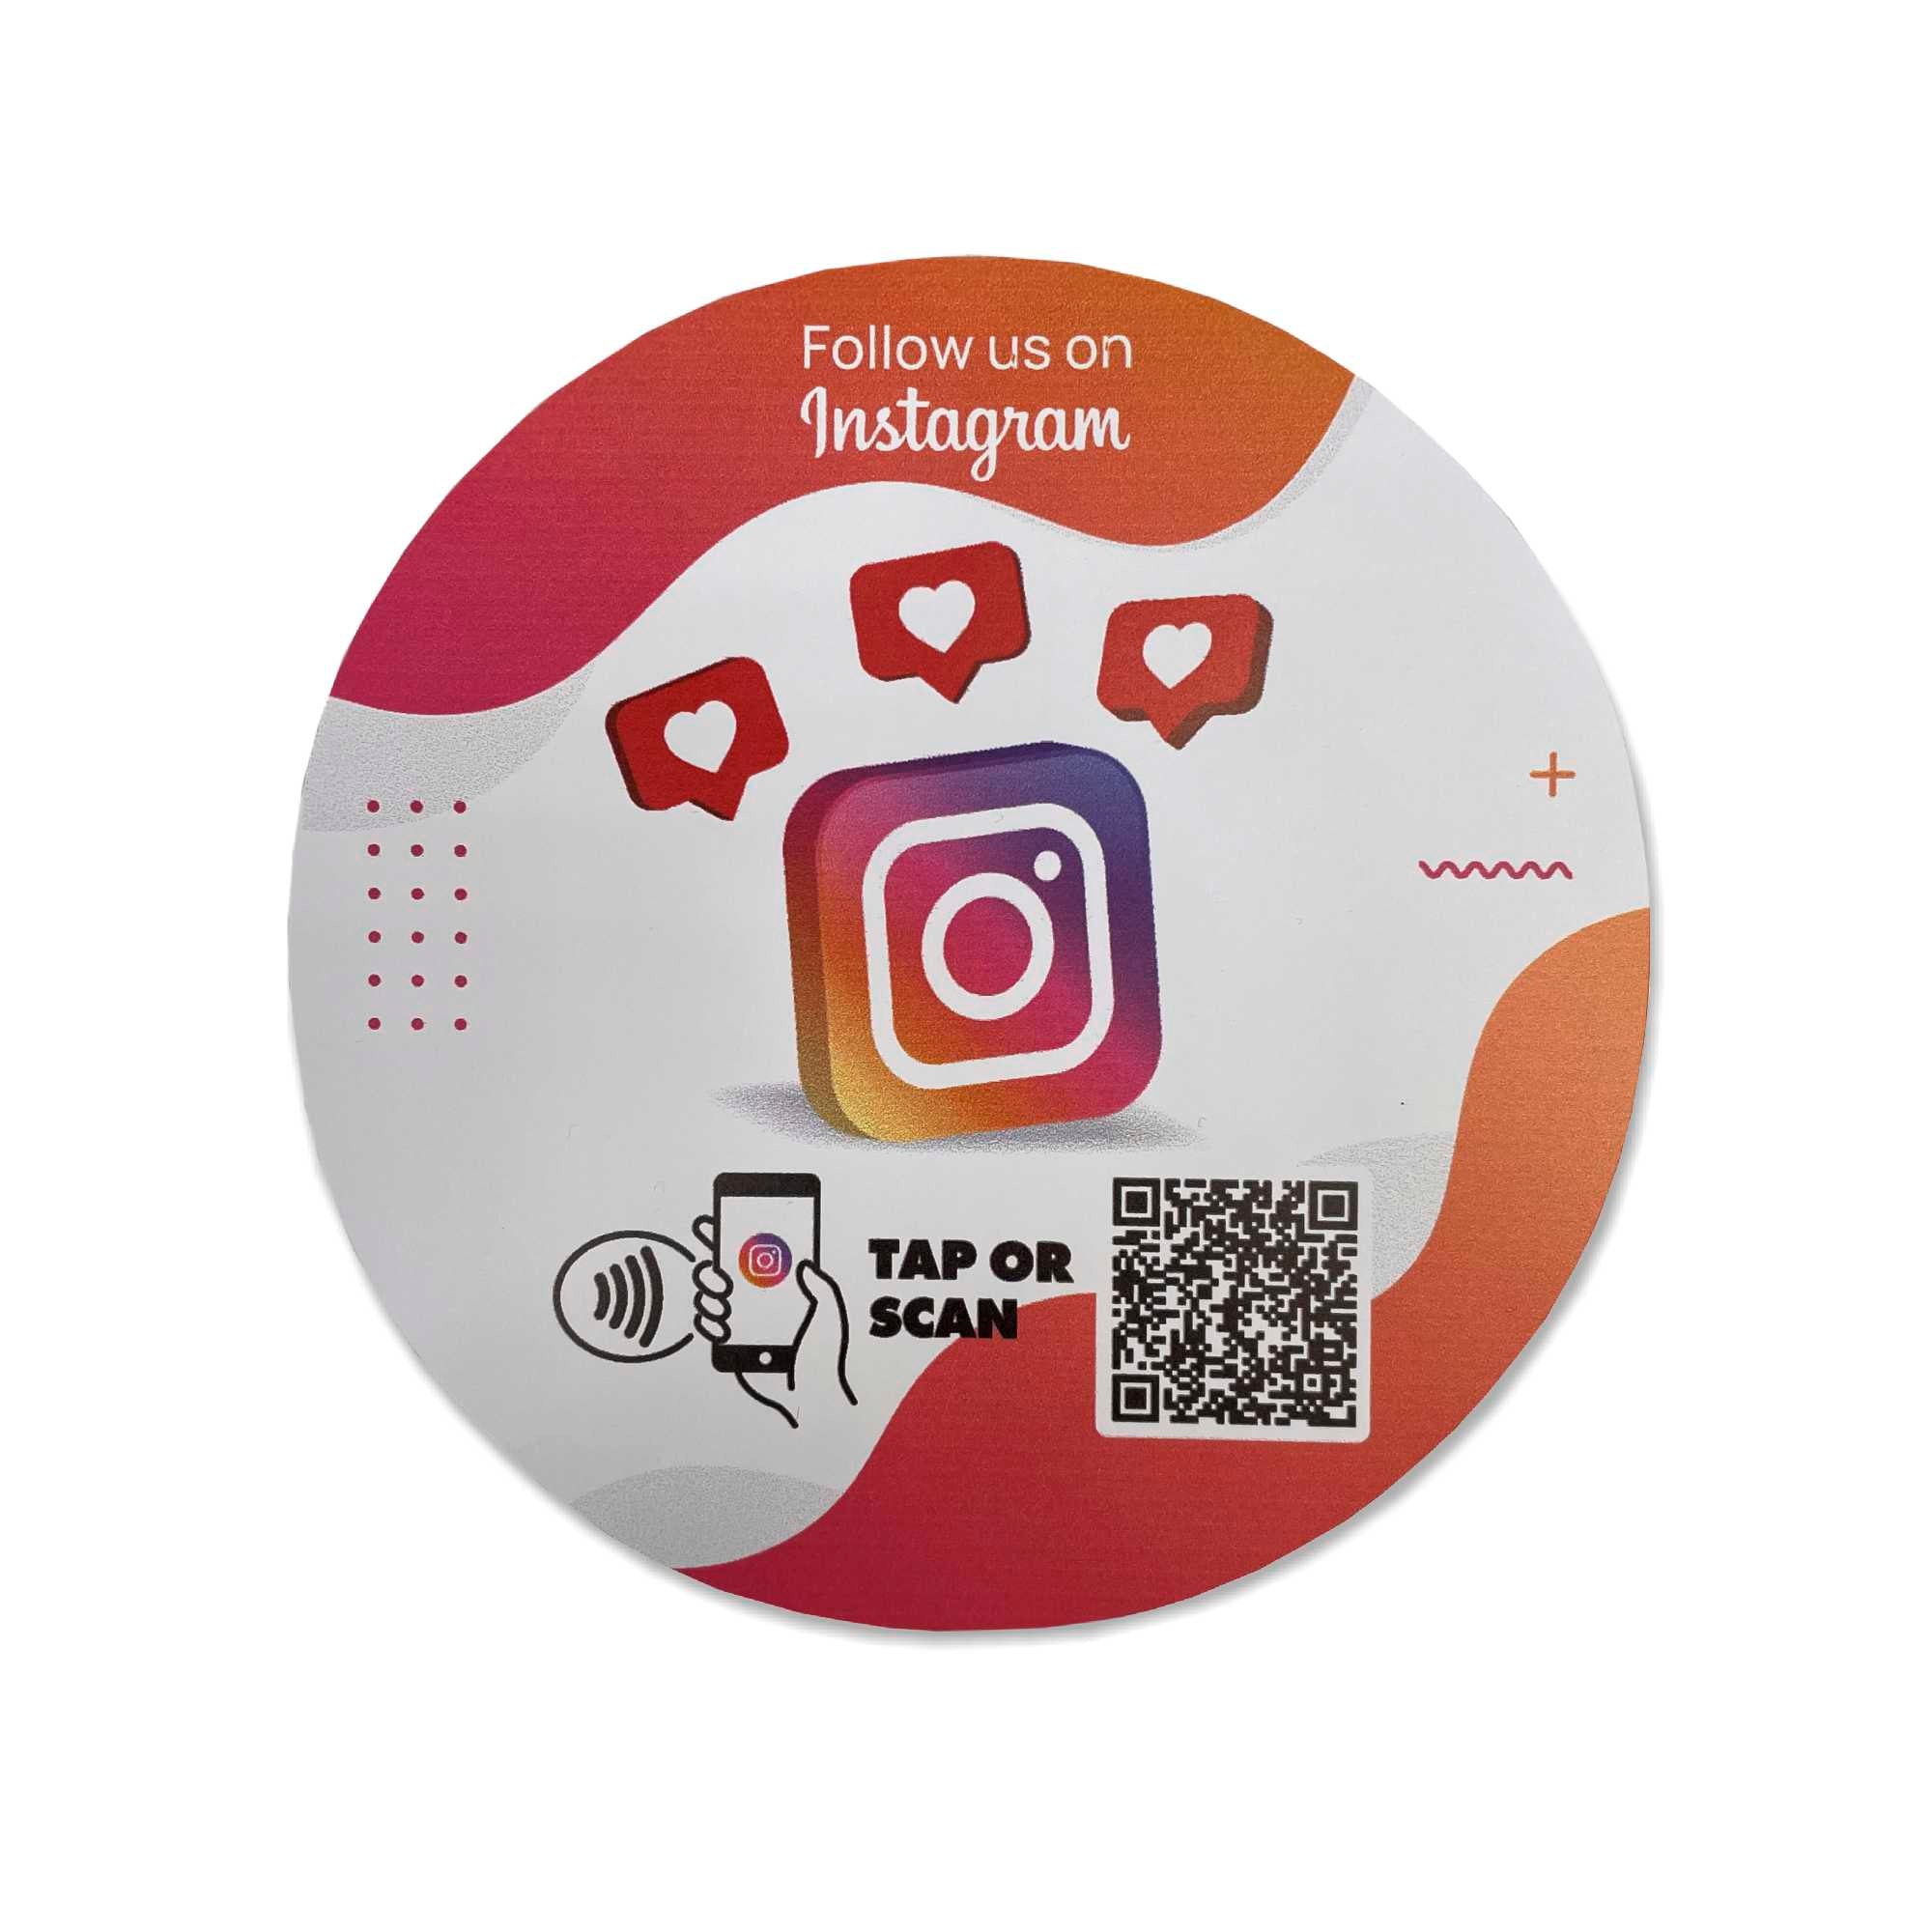 Set Instagram Sticker με ή χωρίς το λογότυπό σας.